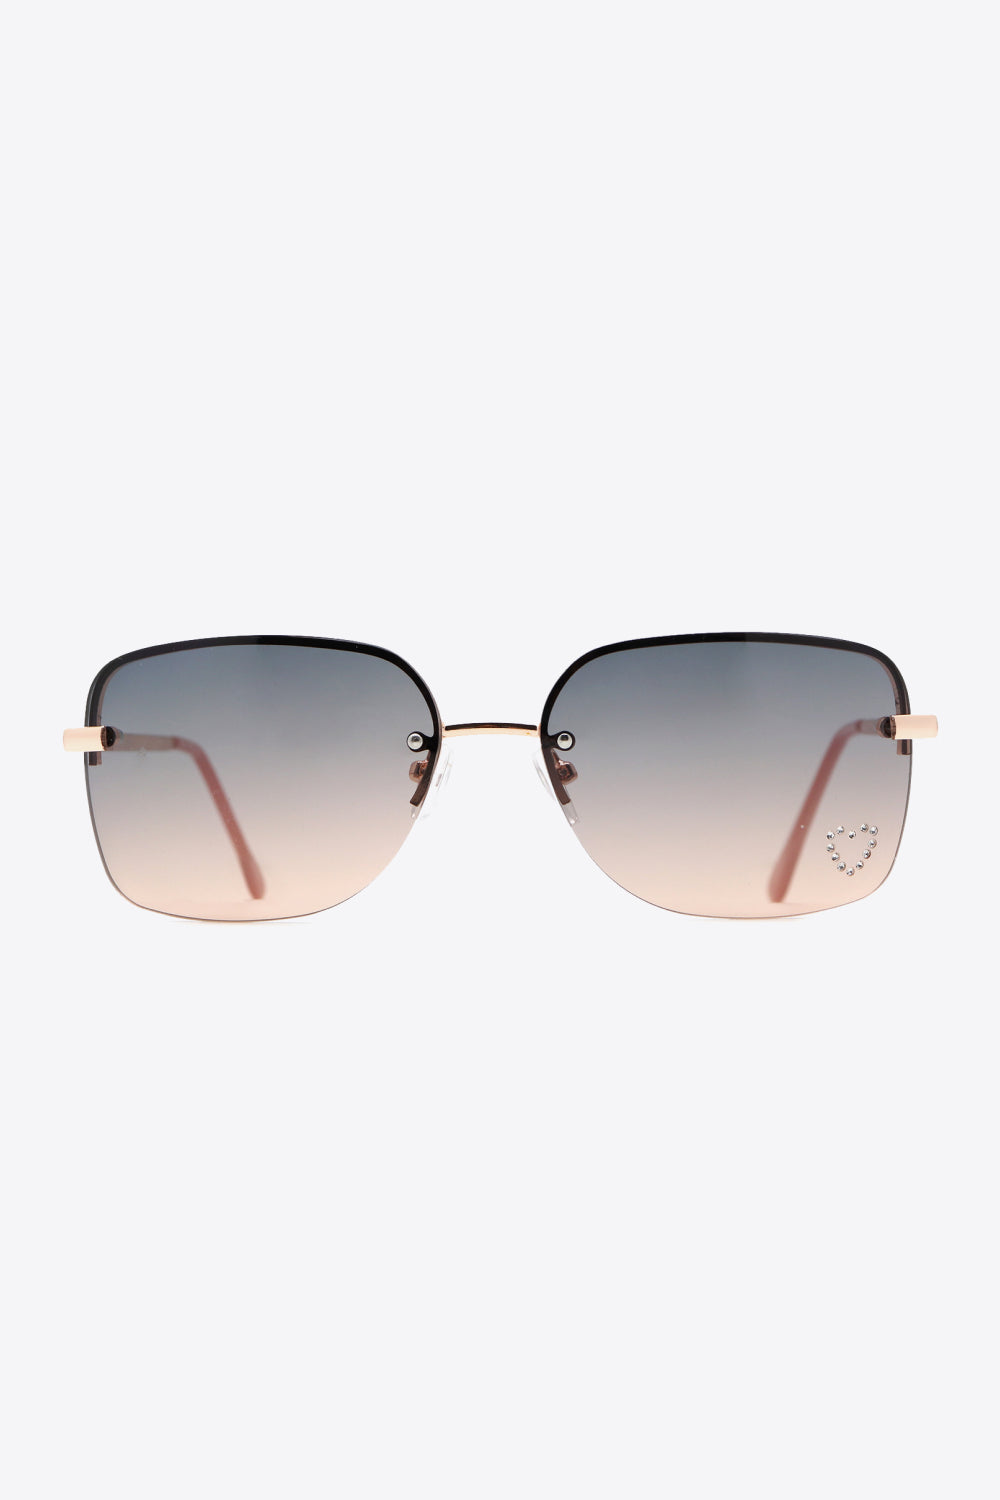 Rhinestone Heart Metal Frame Sunglasses - AllIn Computer